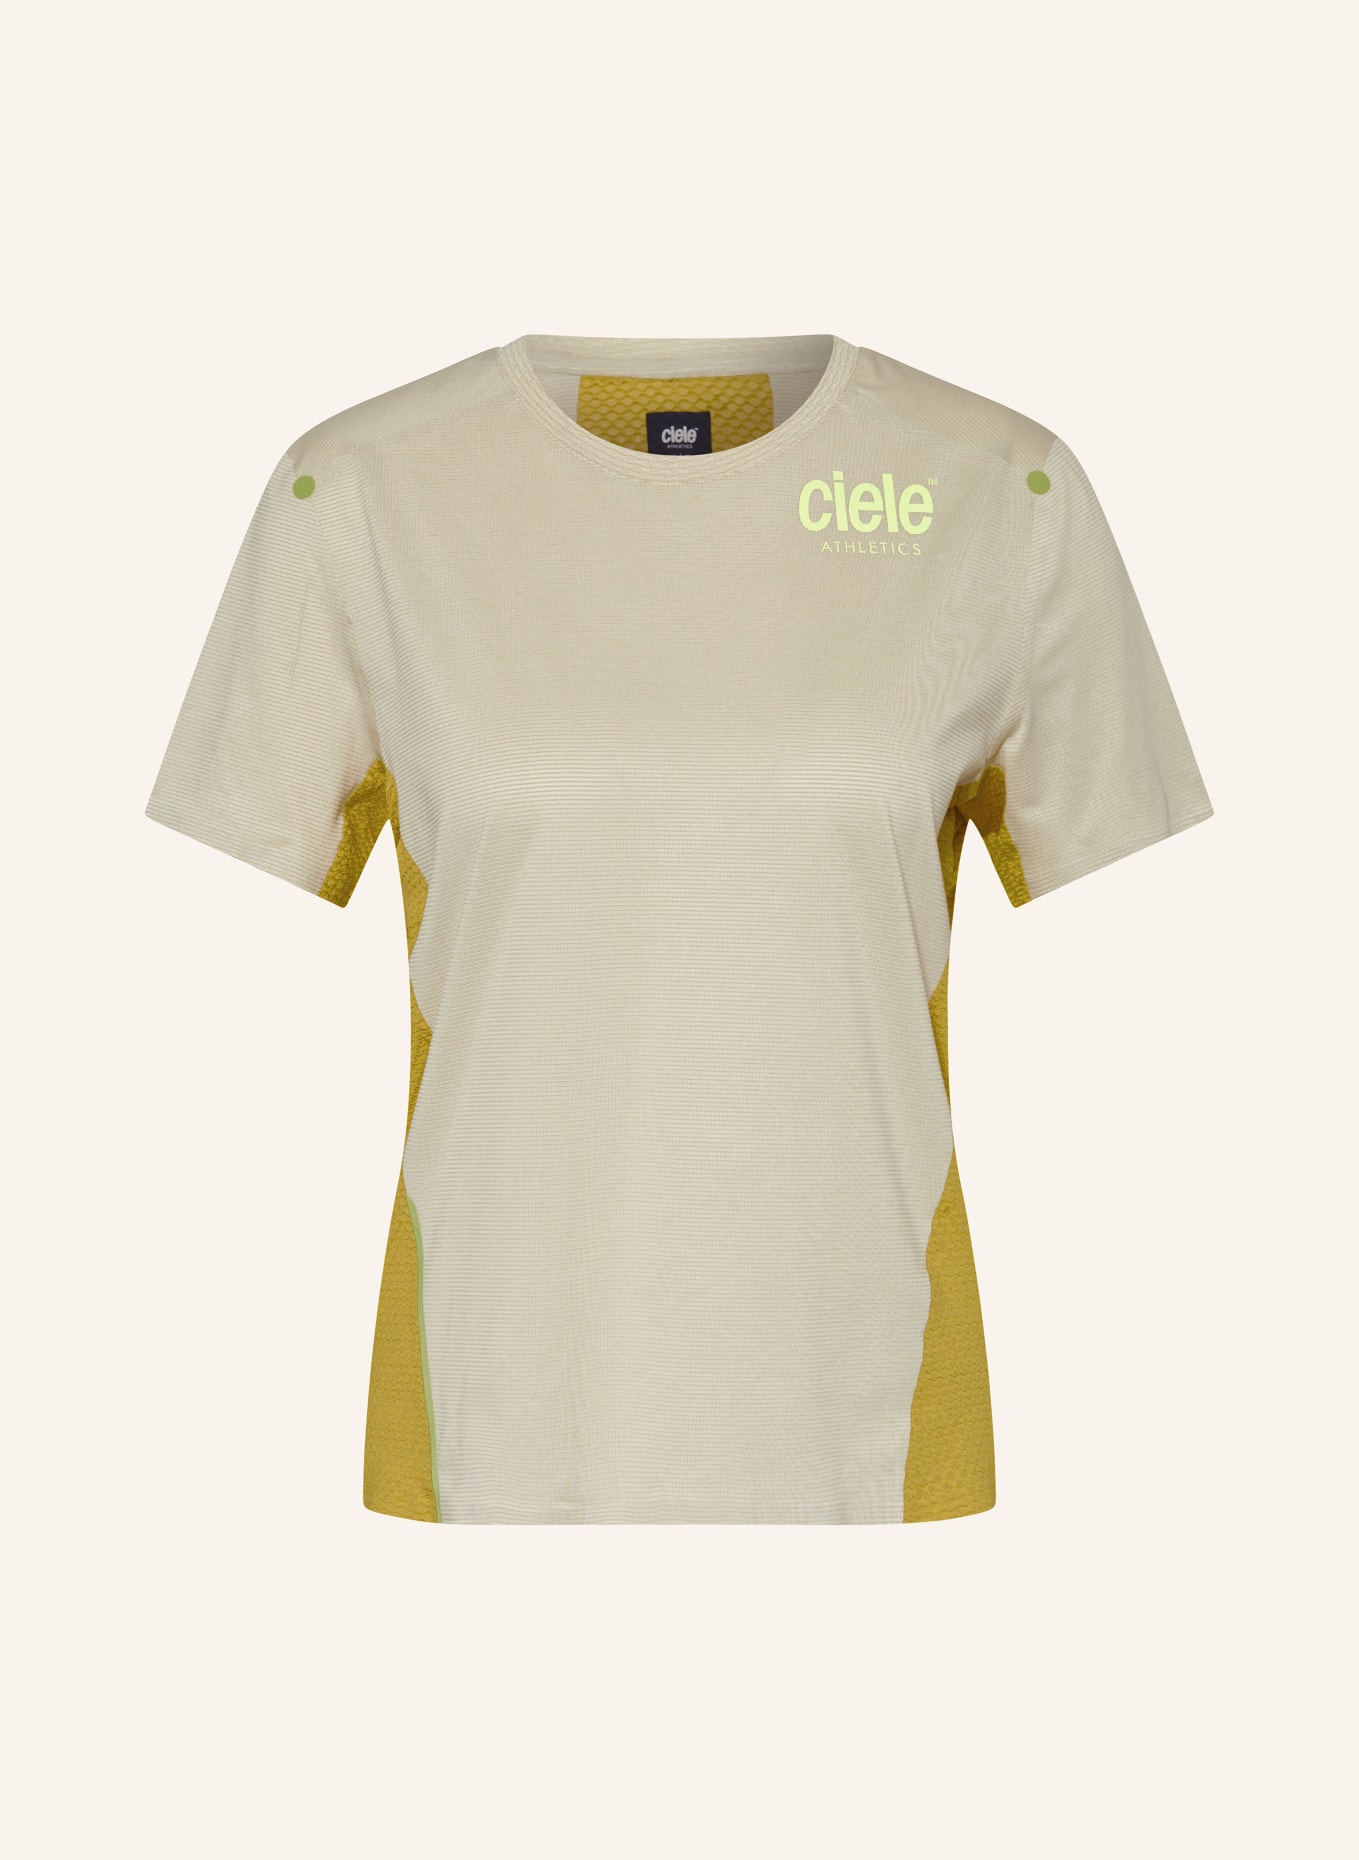 ciele athletics T-Shirt ELITE, Farbe: BEIGE (Bild 1)